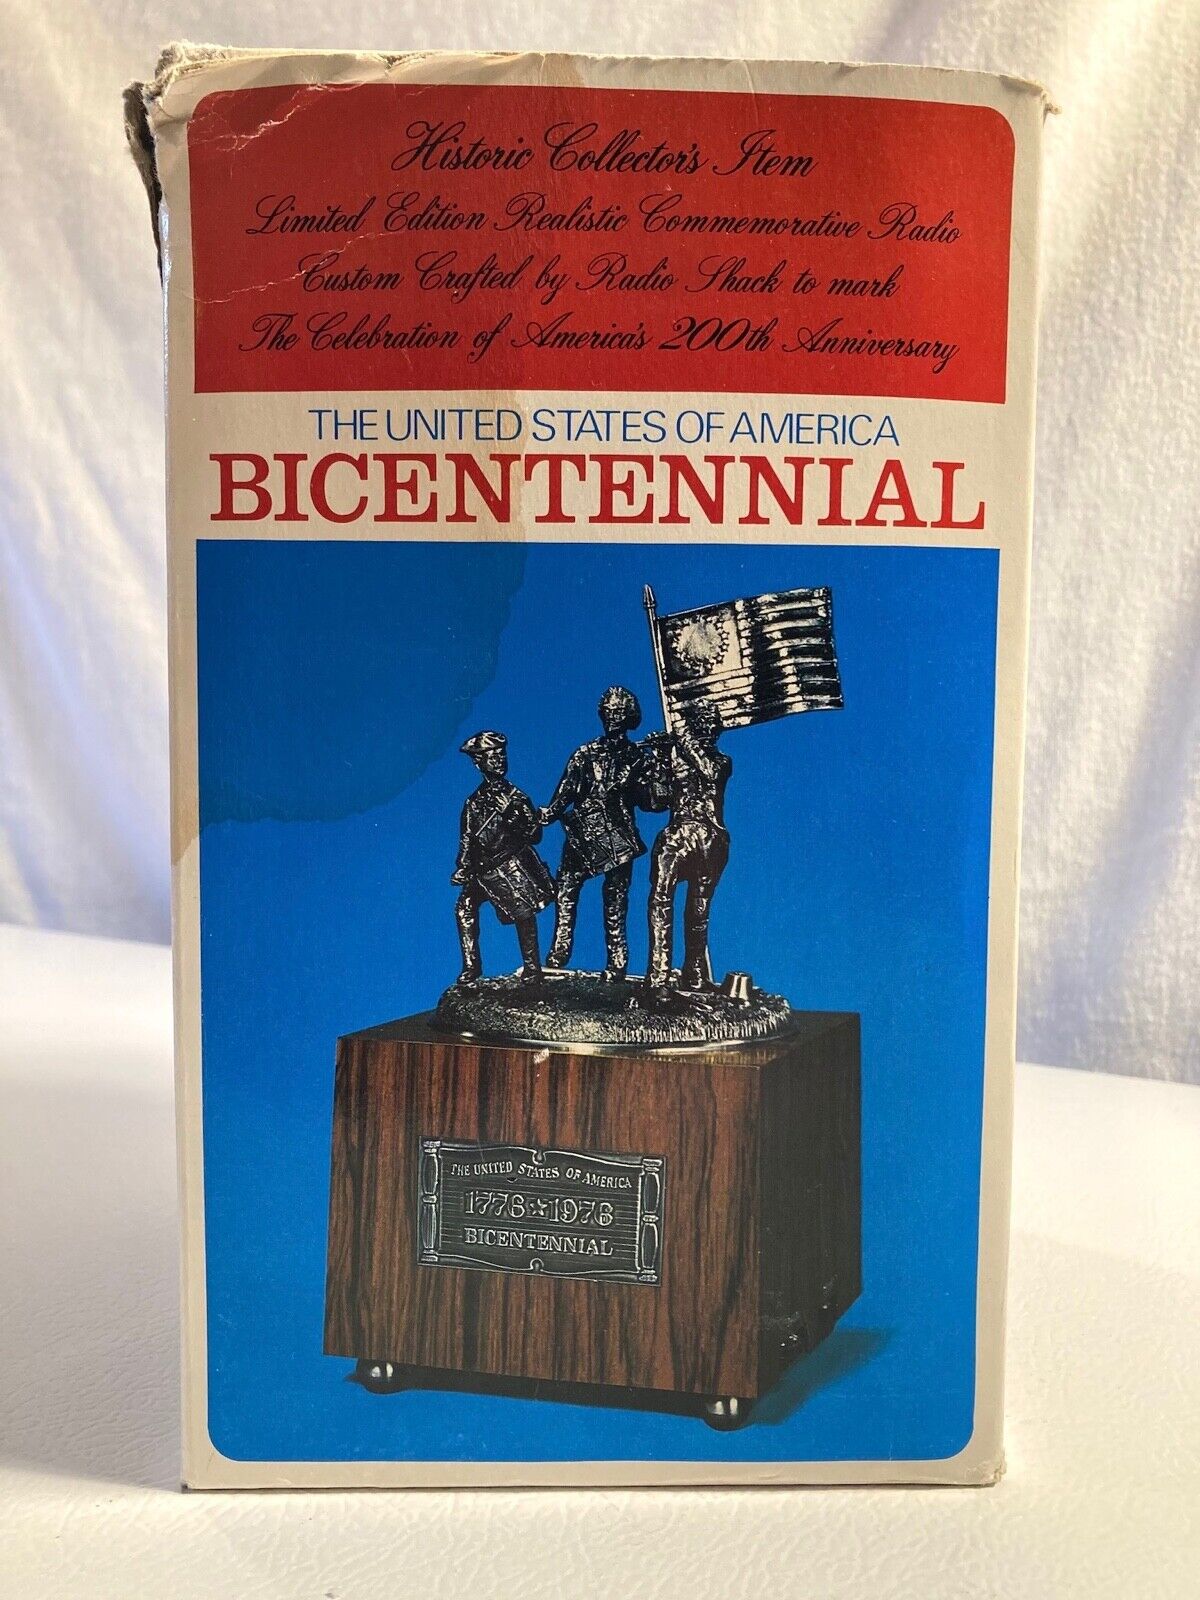 NEW Realistic 12-1776 1976 Bicentennial AM Radio w/ Original Box - Made in Japan